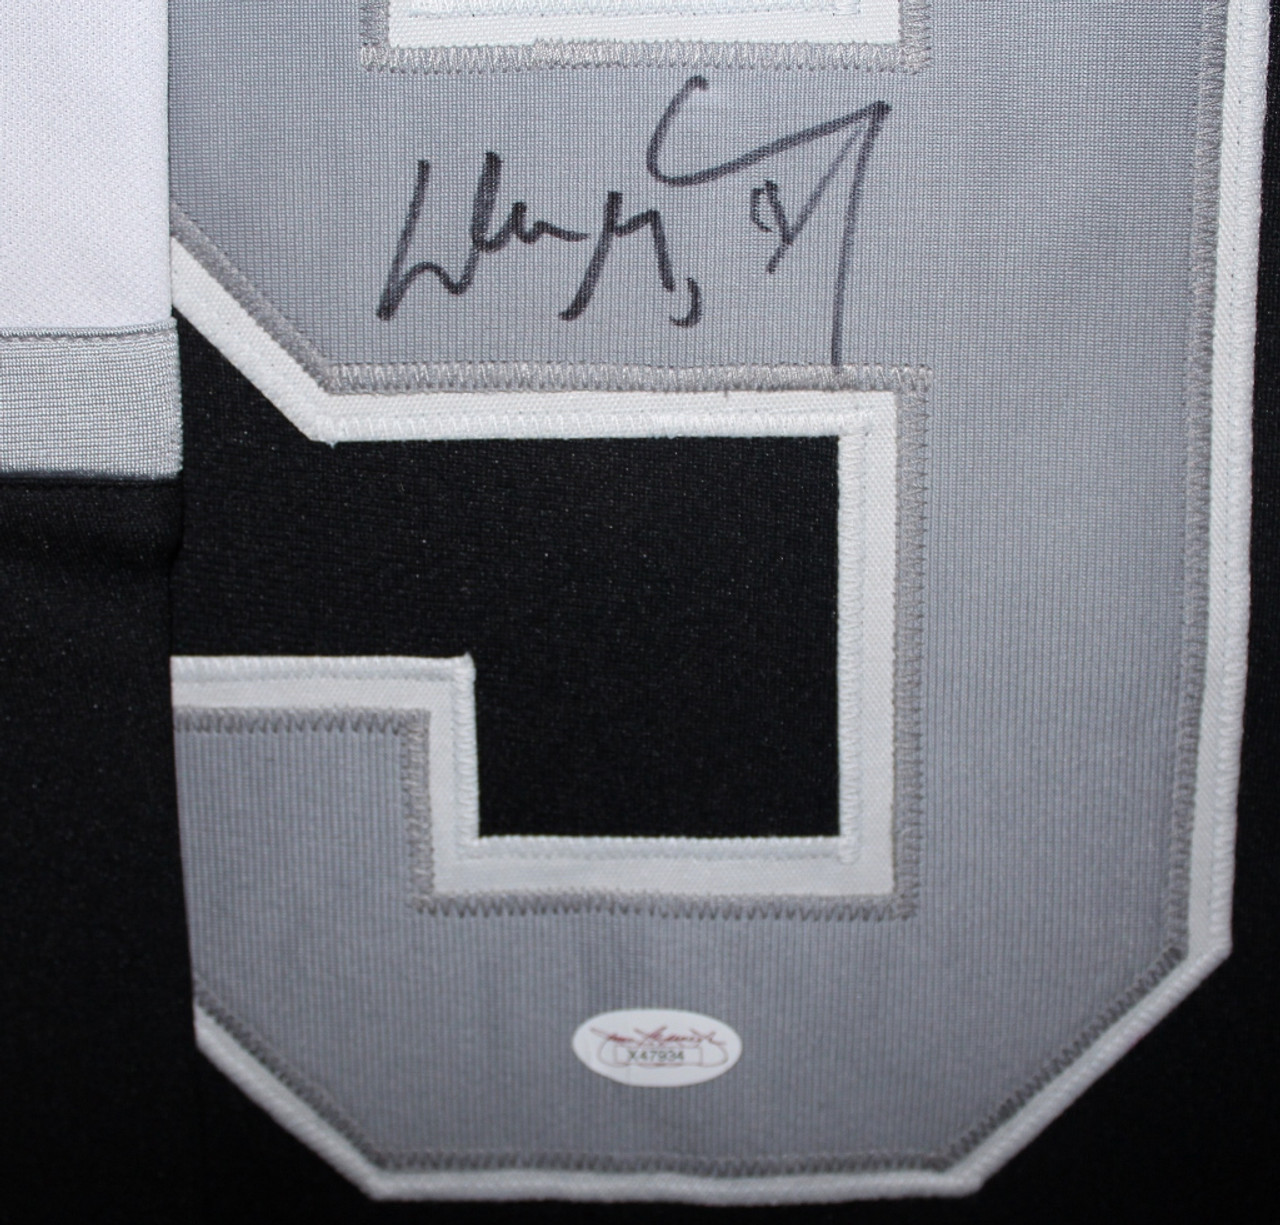 Wayne Gretzky Autographed and Framed Black Kings Jersey